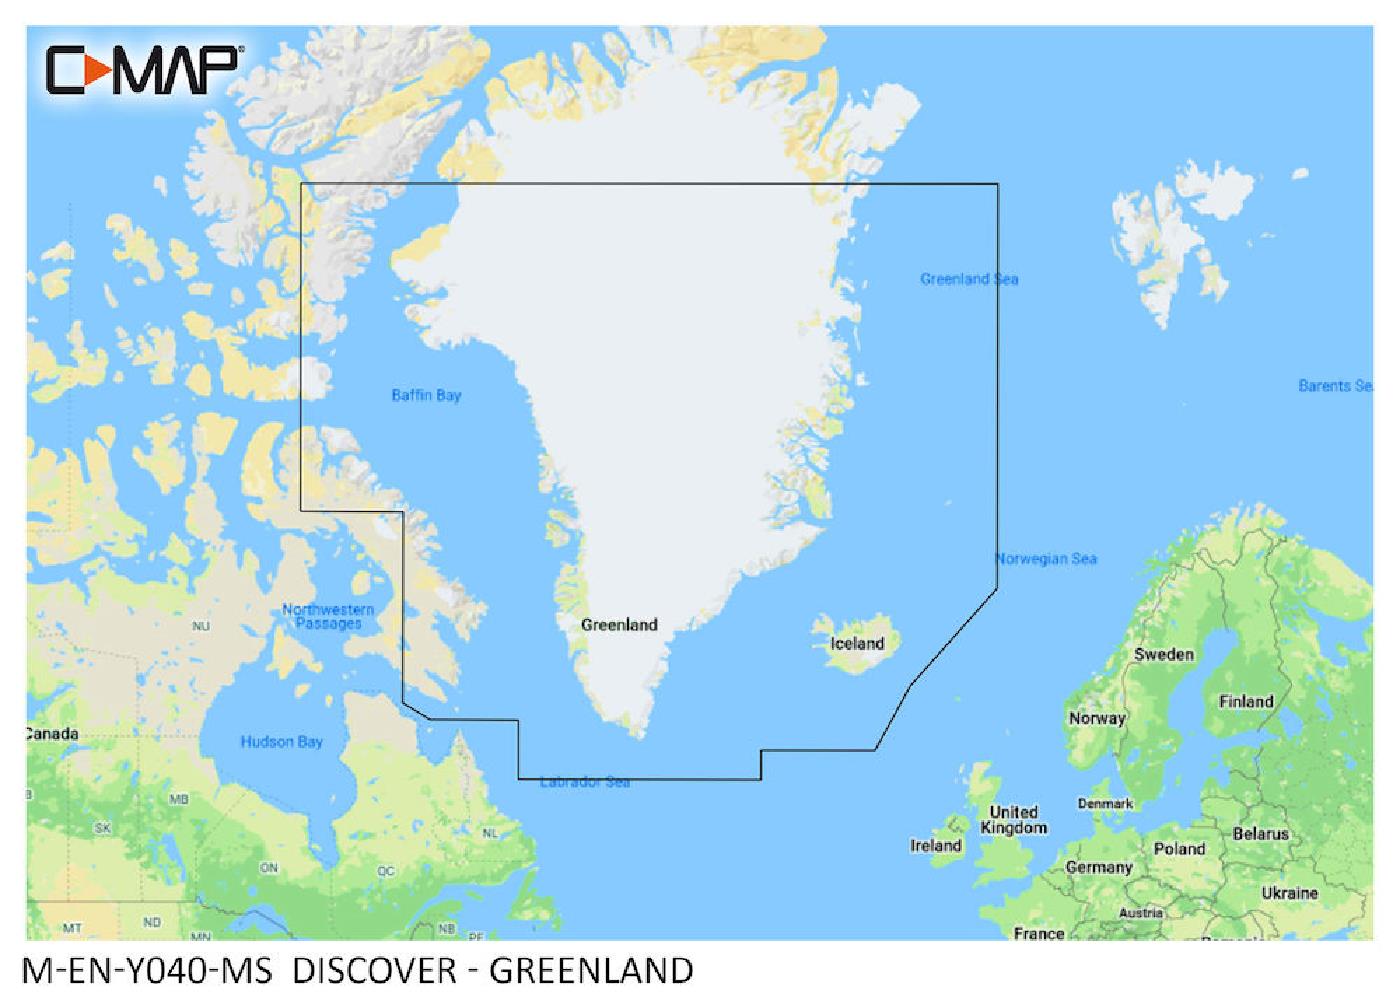 C-MAP Discover Groenland M-EN-Y040-MS